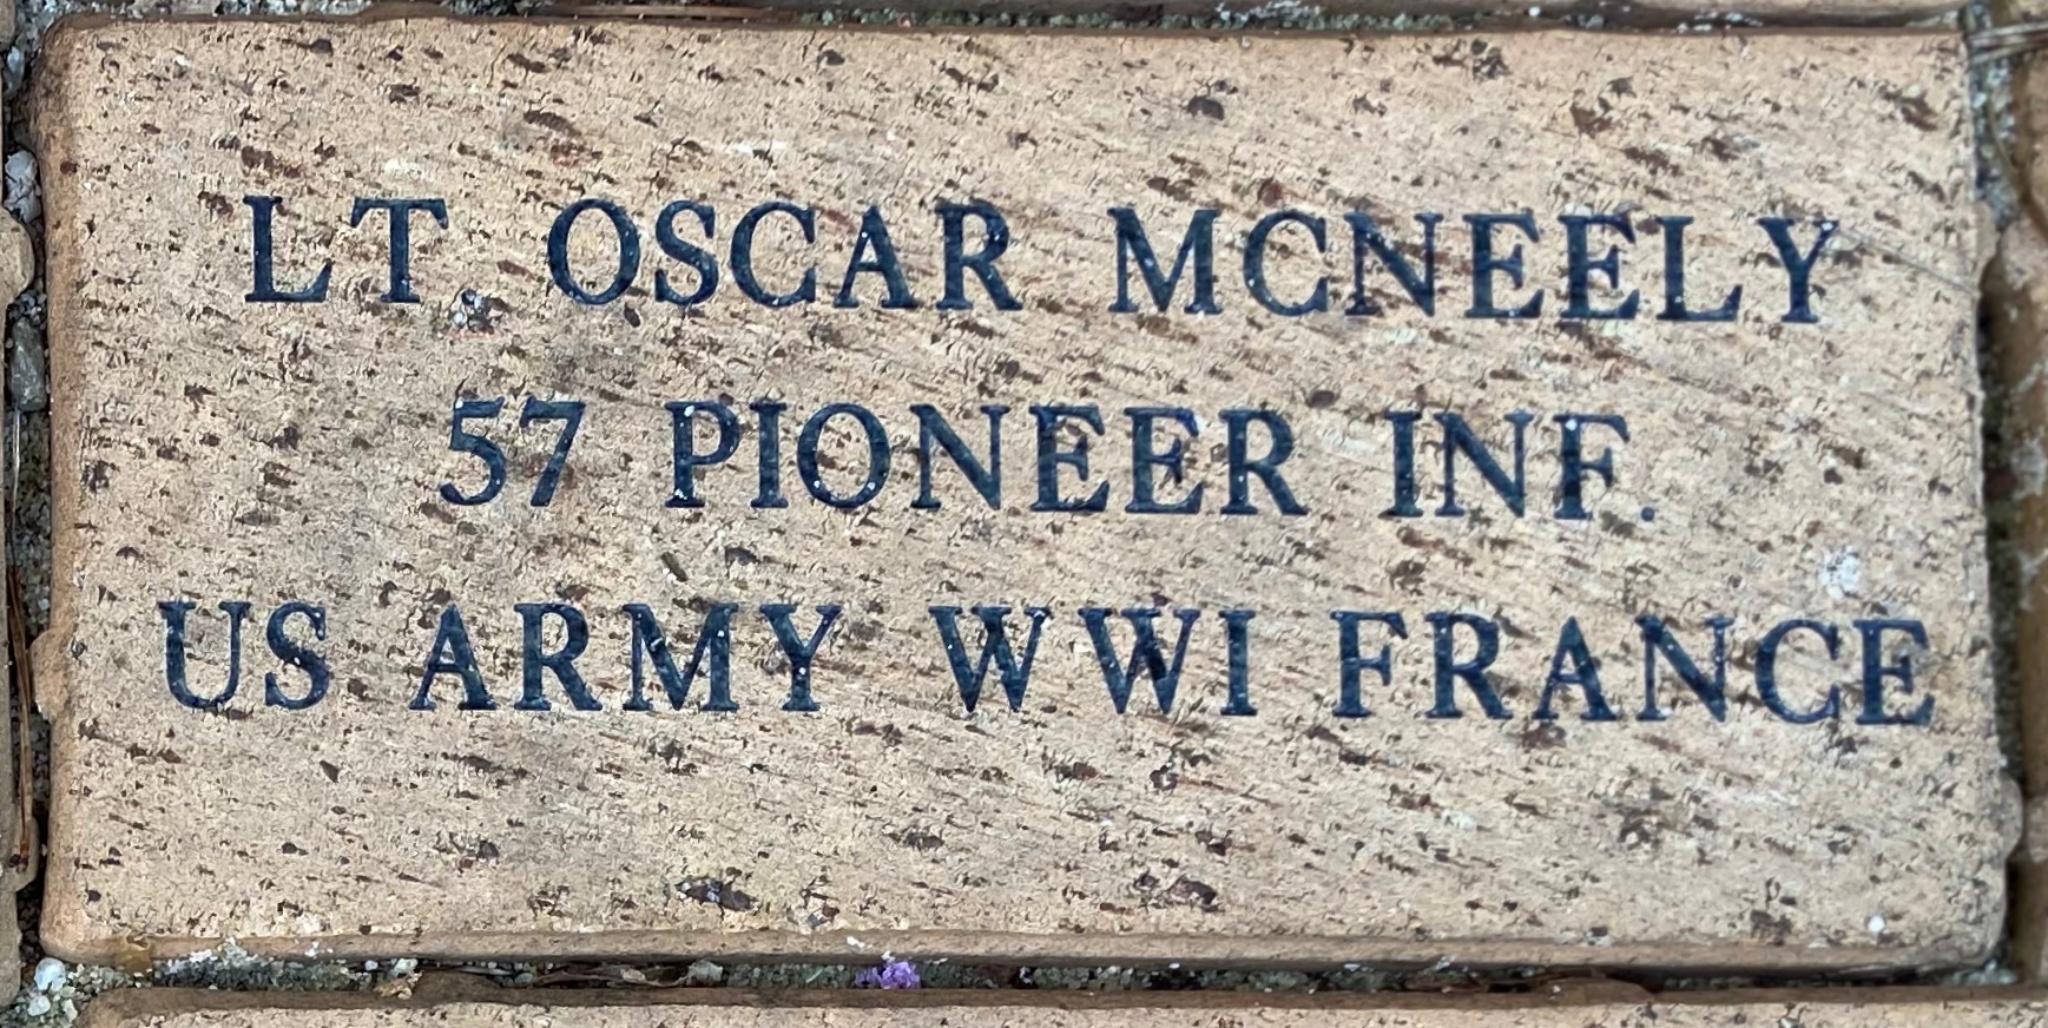 LT. OSCAR MCNEELY 57 PIONEER INF US ARMY WWI FRANCE